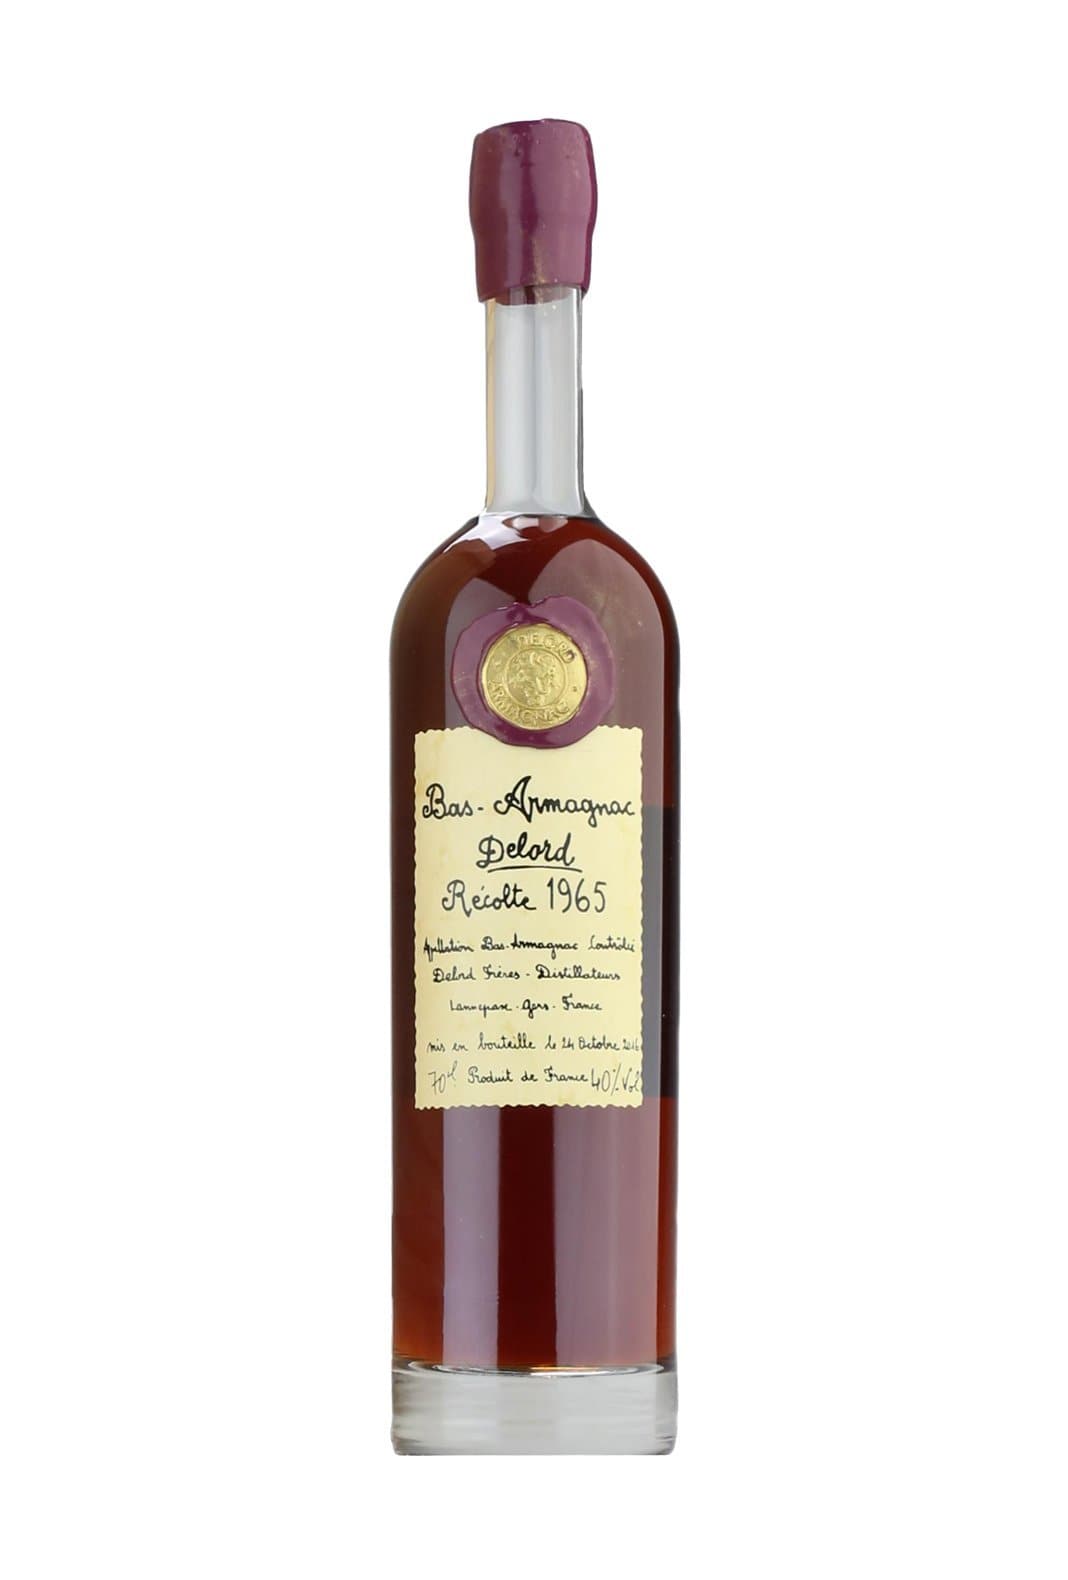 Delord 1965 Bas Armagnac 40% 700ml | Brandy | Shop online at Spirits of France